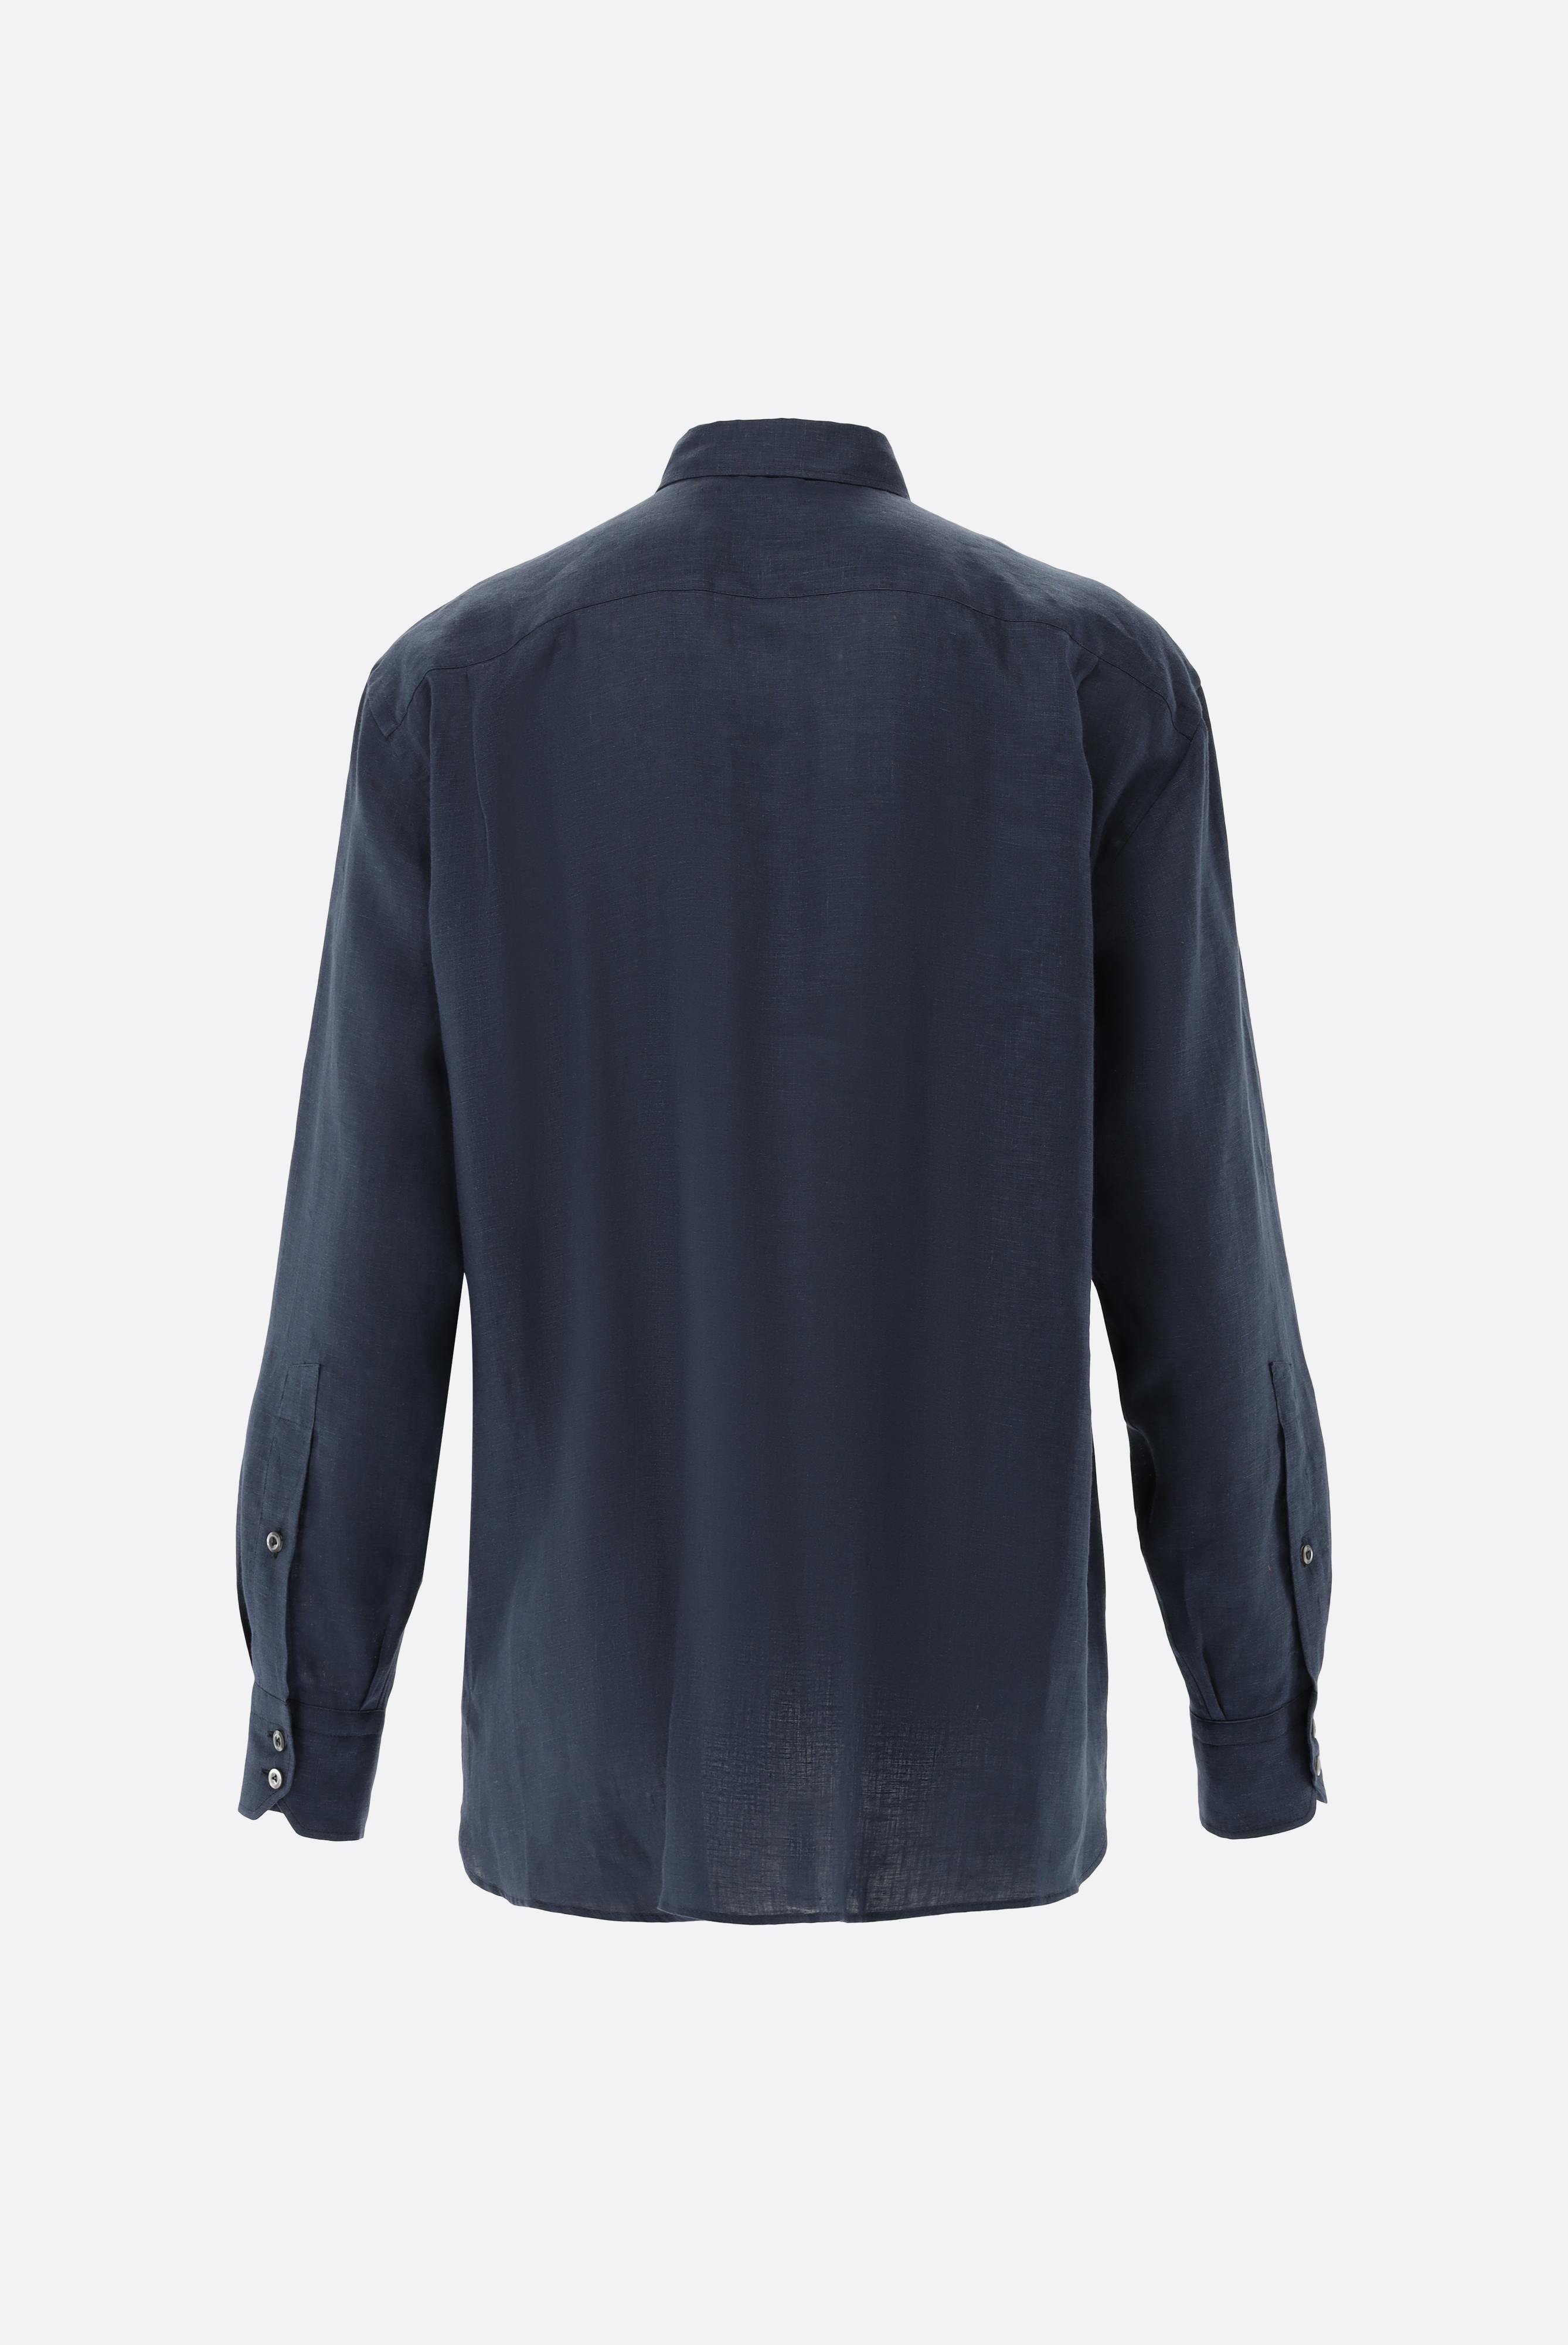 Casual Shirts+Linen Button-Down Collar Shirt+20.2026.9V.150555.785.40